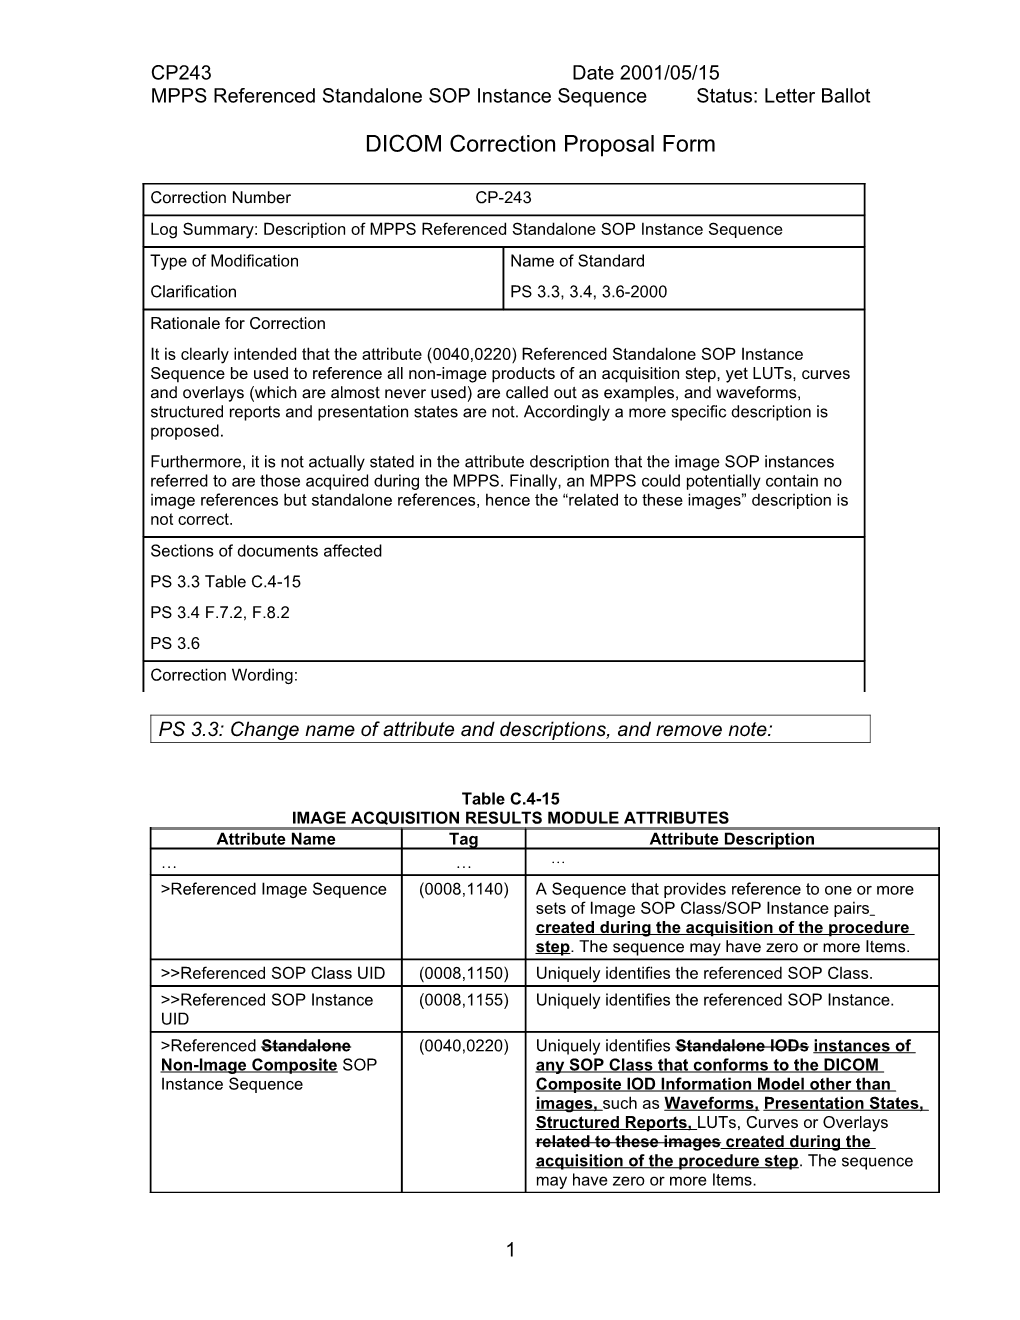 DICOM Correction Proposal Form s1